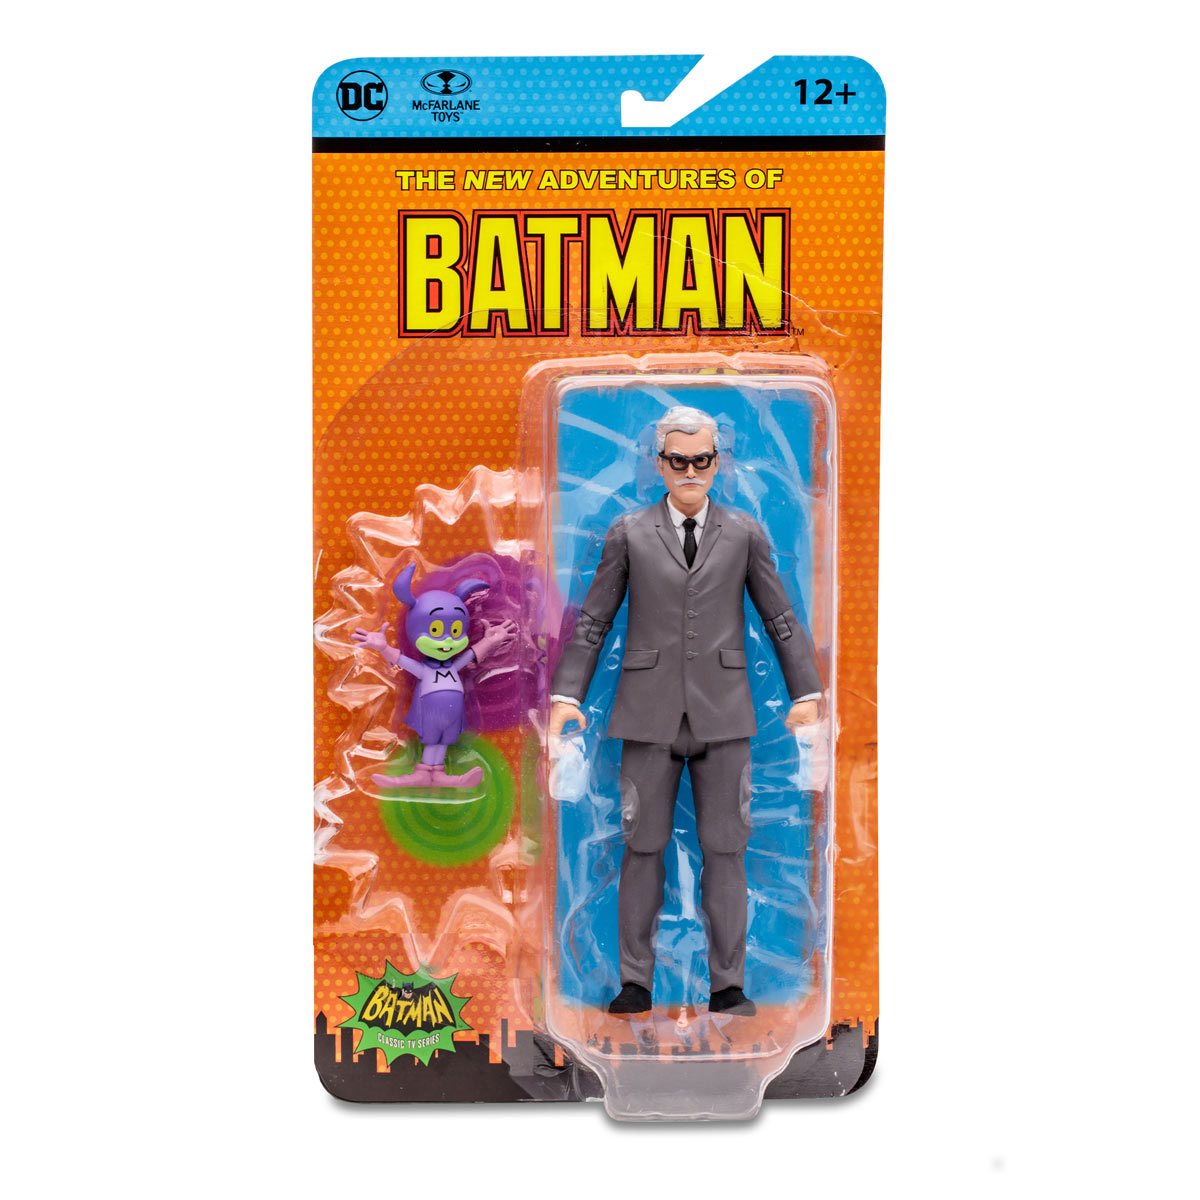 McFarlane DC Retro Figura de Accion: The New Adventures Of Batman - Comisario Gordon 6 Pulgadas